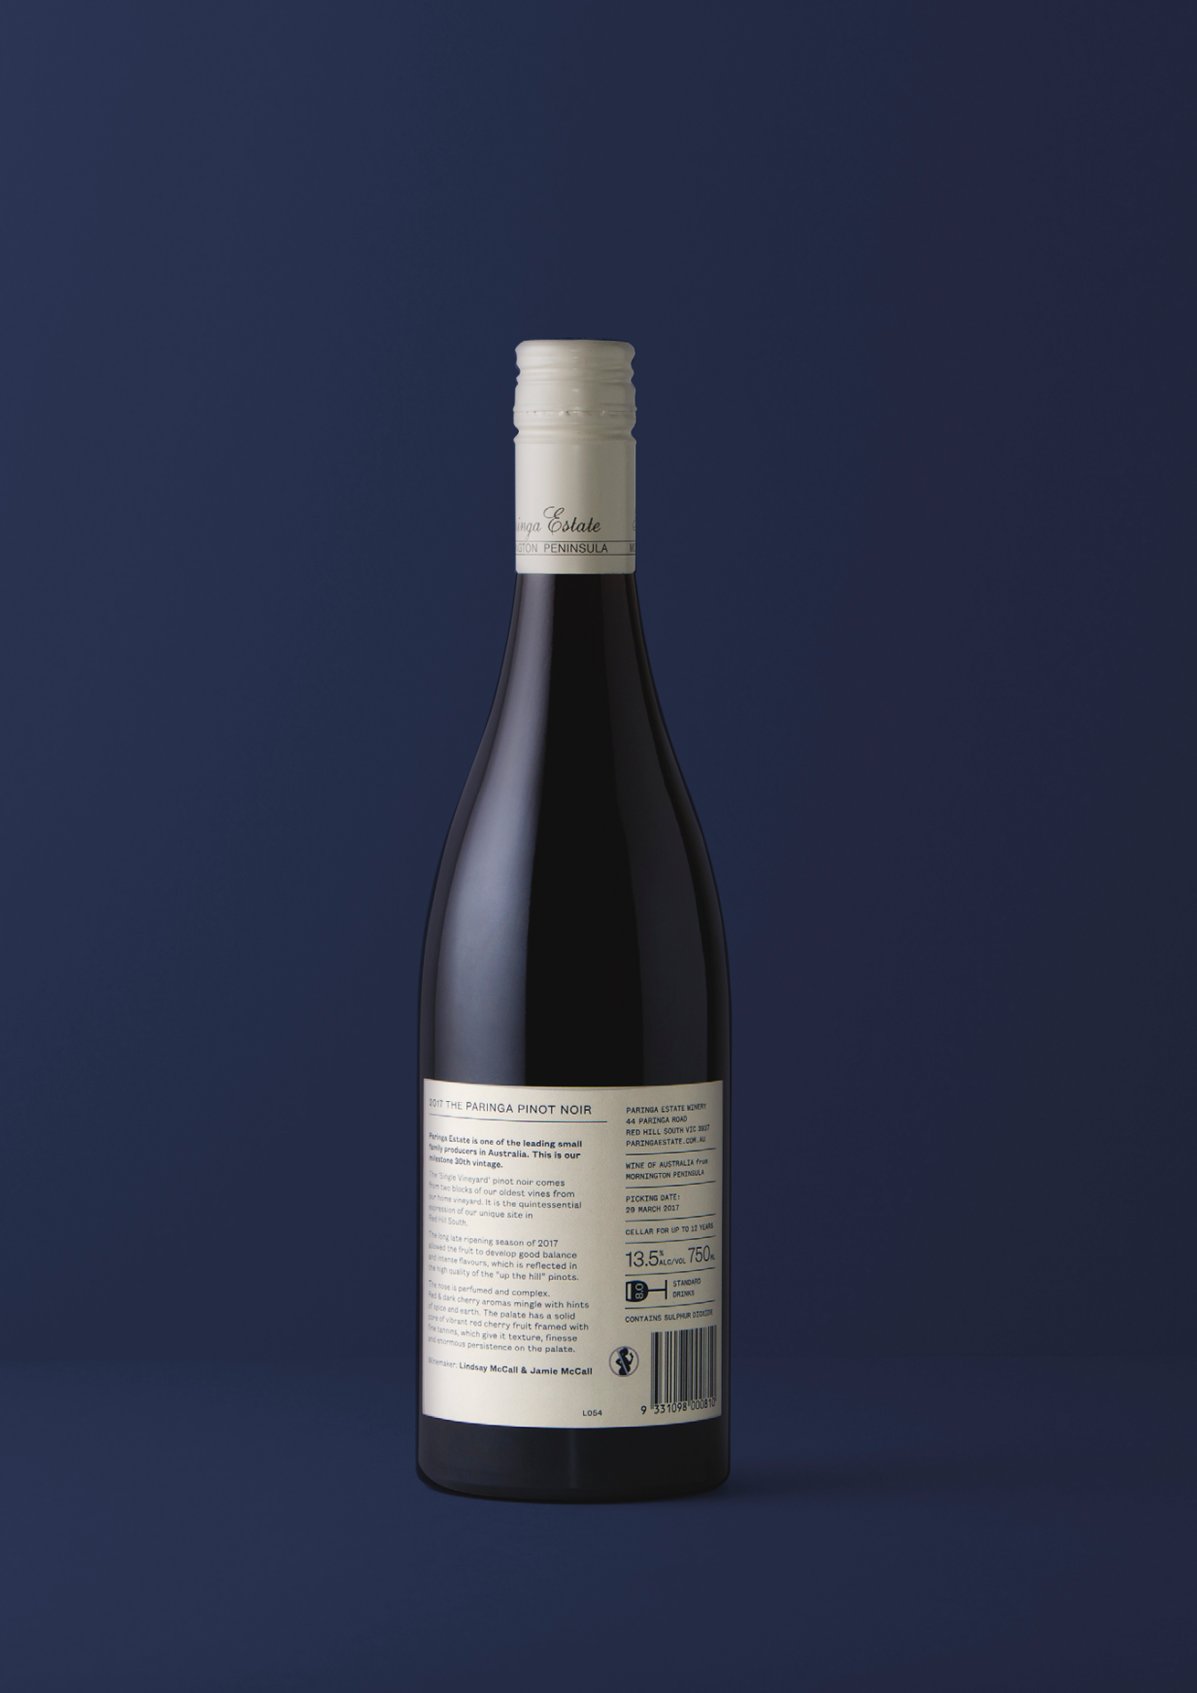 New wine label design for iconic Mornington Peninsula wine brand Paringa Estate.